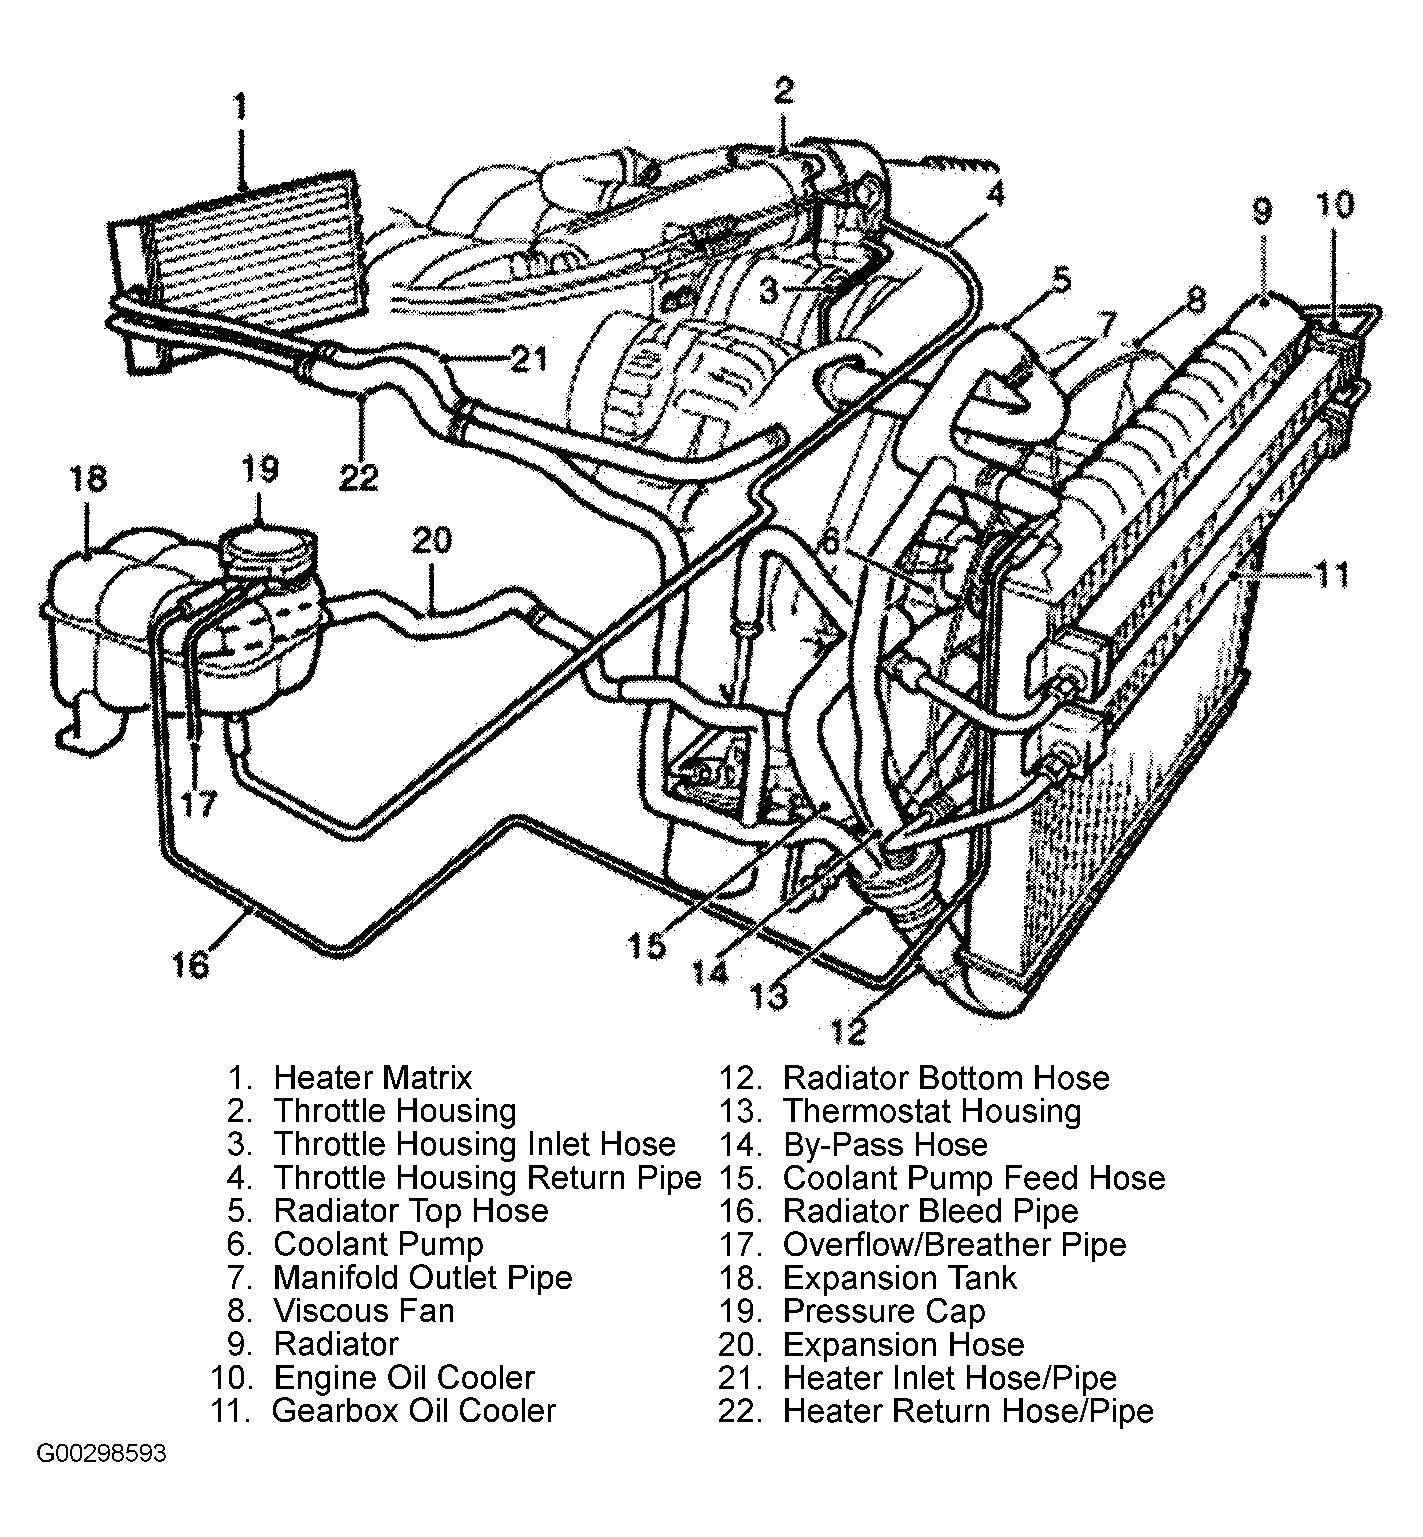 Coolant System Diagram Rover Engine Diagrams Wiring Diagrams Of Coolant System Diagram